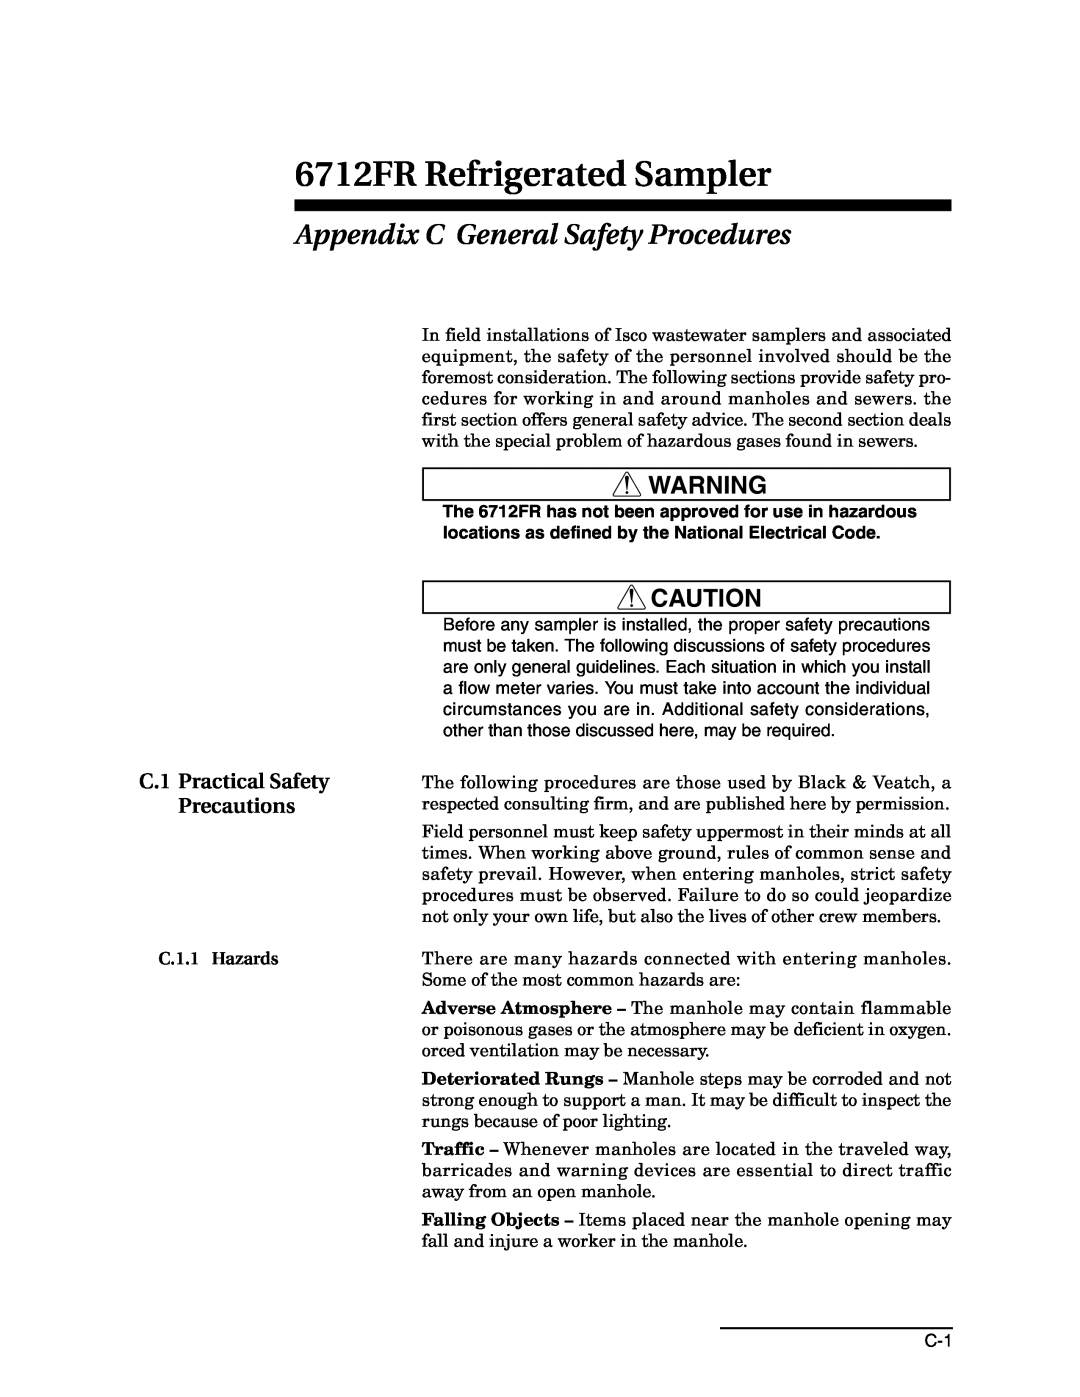 Teledyne manual Appendix C General Safety Procedures, C.1 Practical Safety Precautions, 6712FR Refrigerated Sampler 